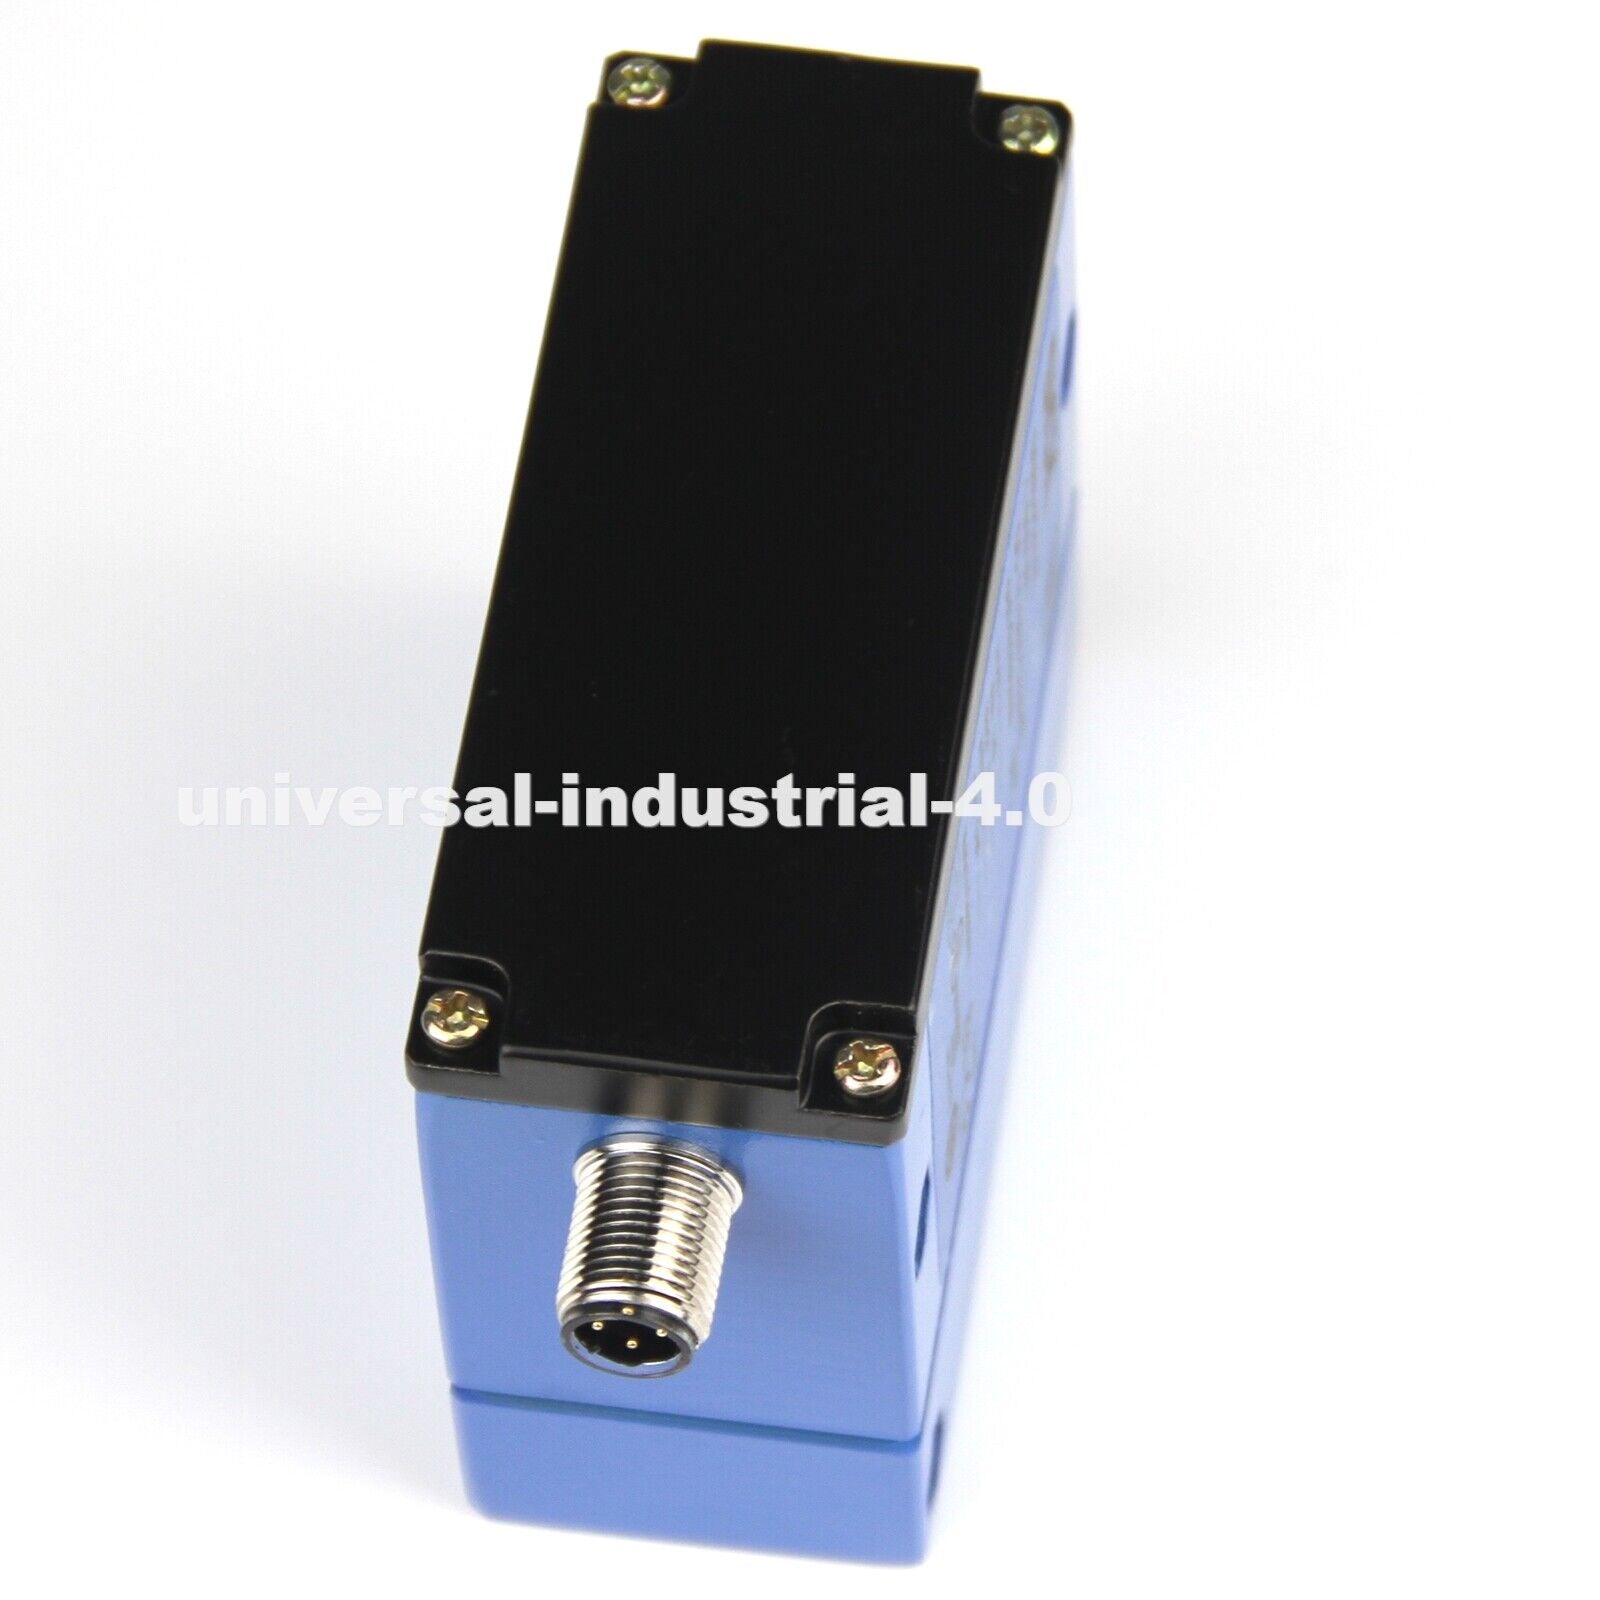 new  SICK DS60-P21111 Photoelectric Proximity Sensor